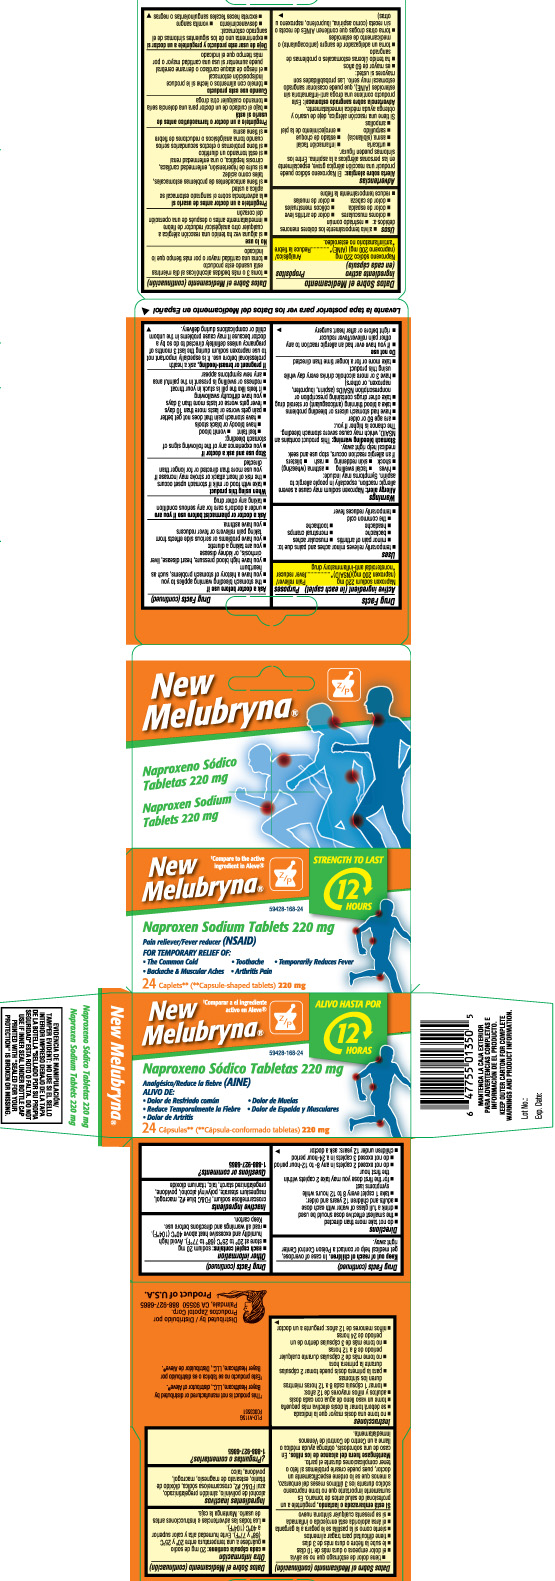 Naproxen Sodium 220 mg (naproxen 200 mg)(NSAID)* *nonsteroidal anti-inflammatory drug